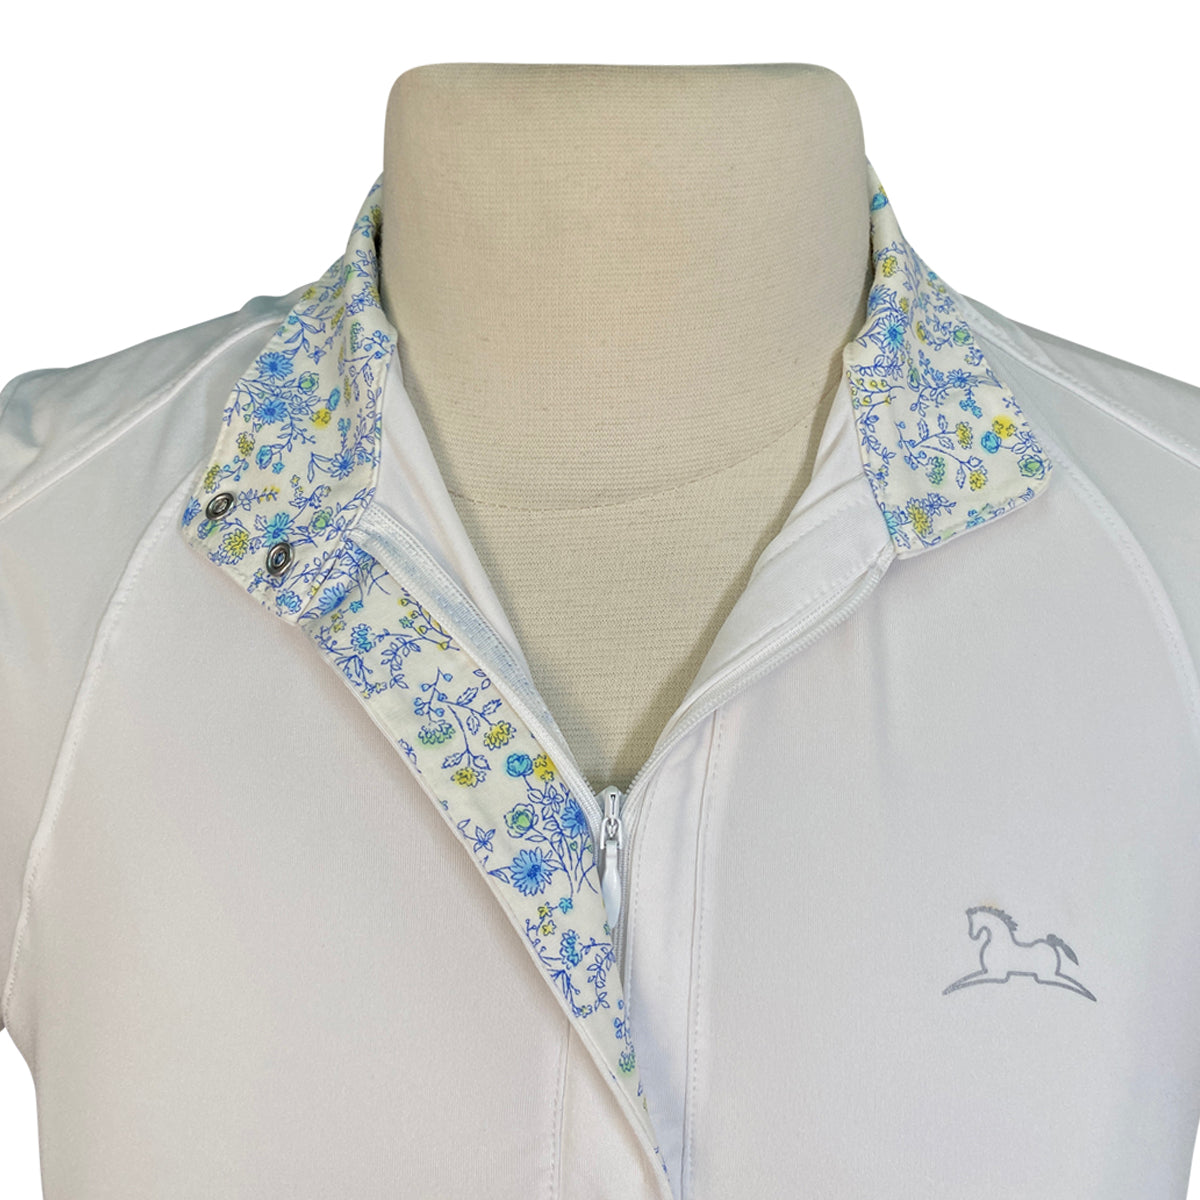 RJ Classics &#39;Sadie 37.5&#39; Ladies Show Shirt in White w/Floral Pattern